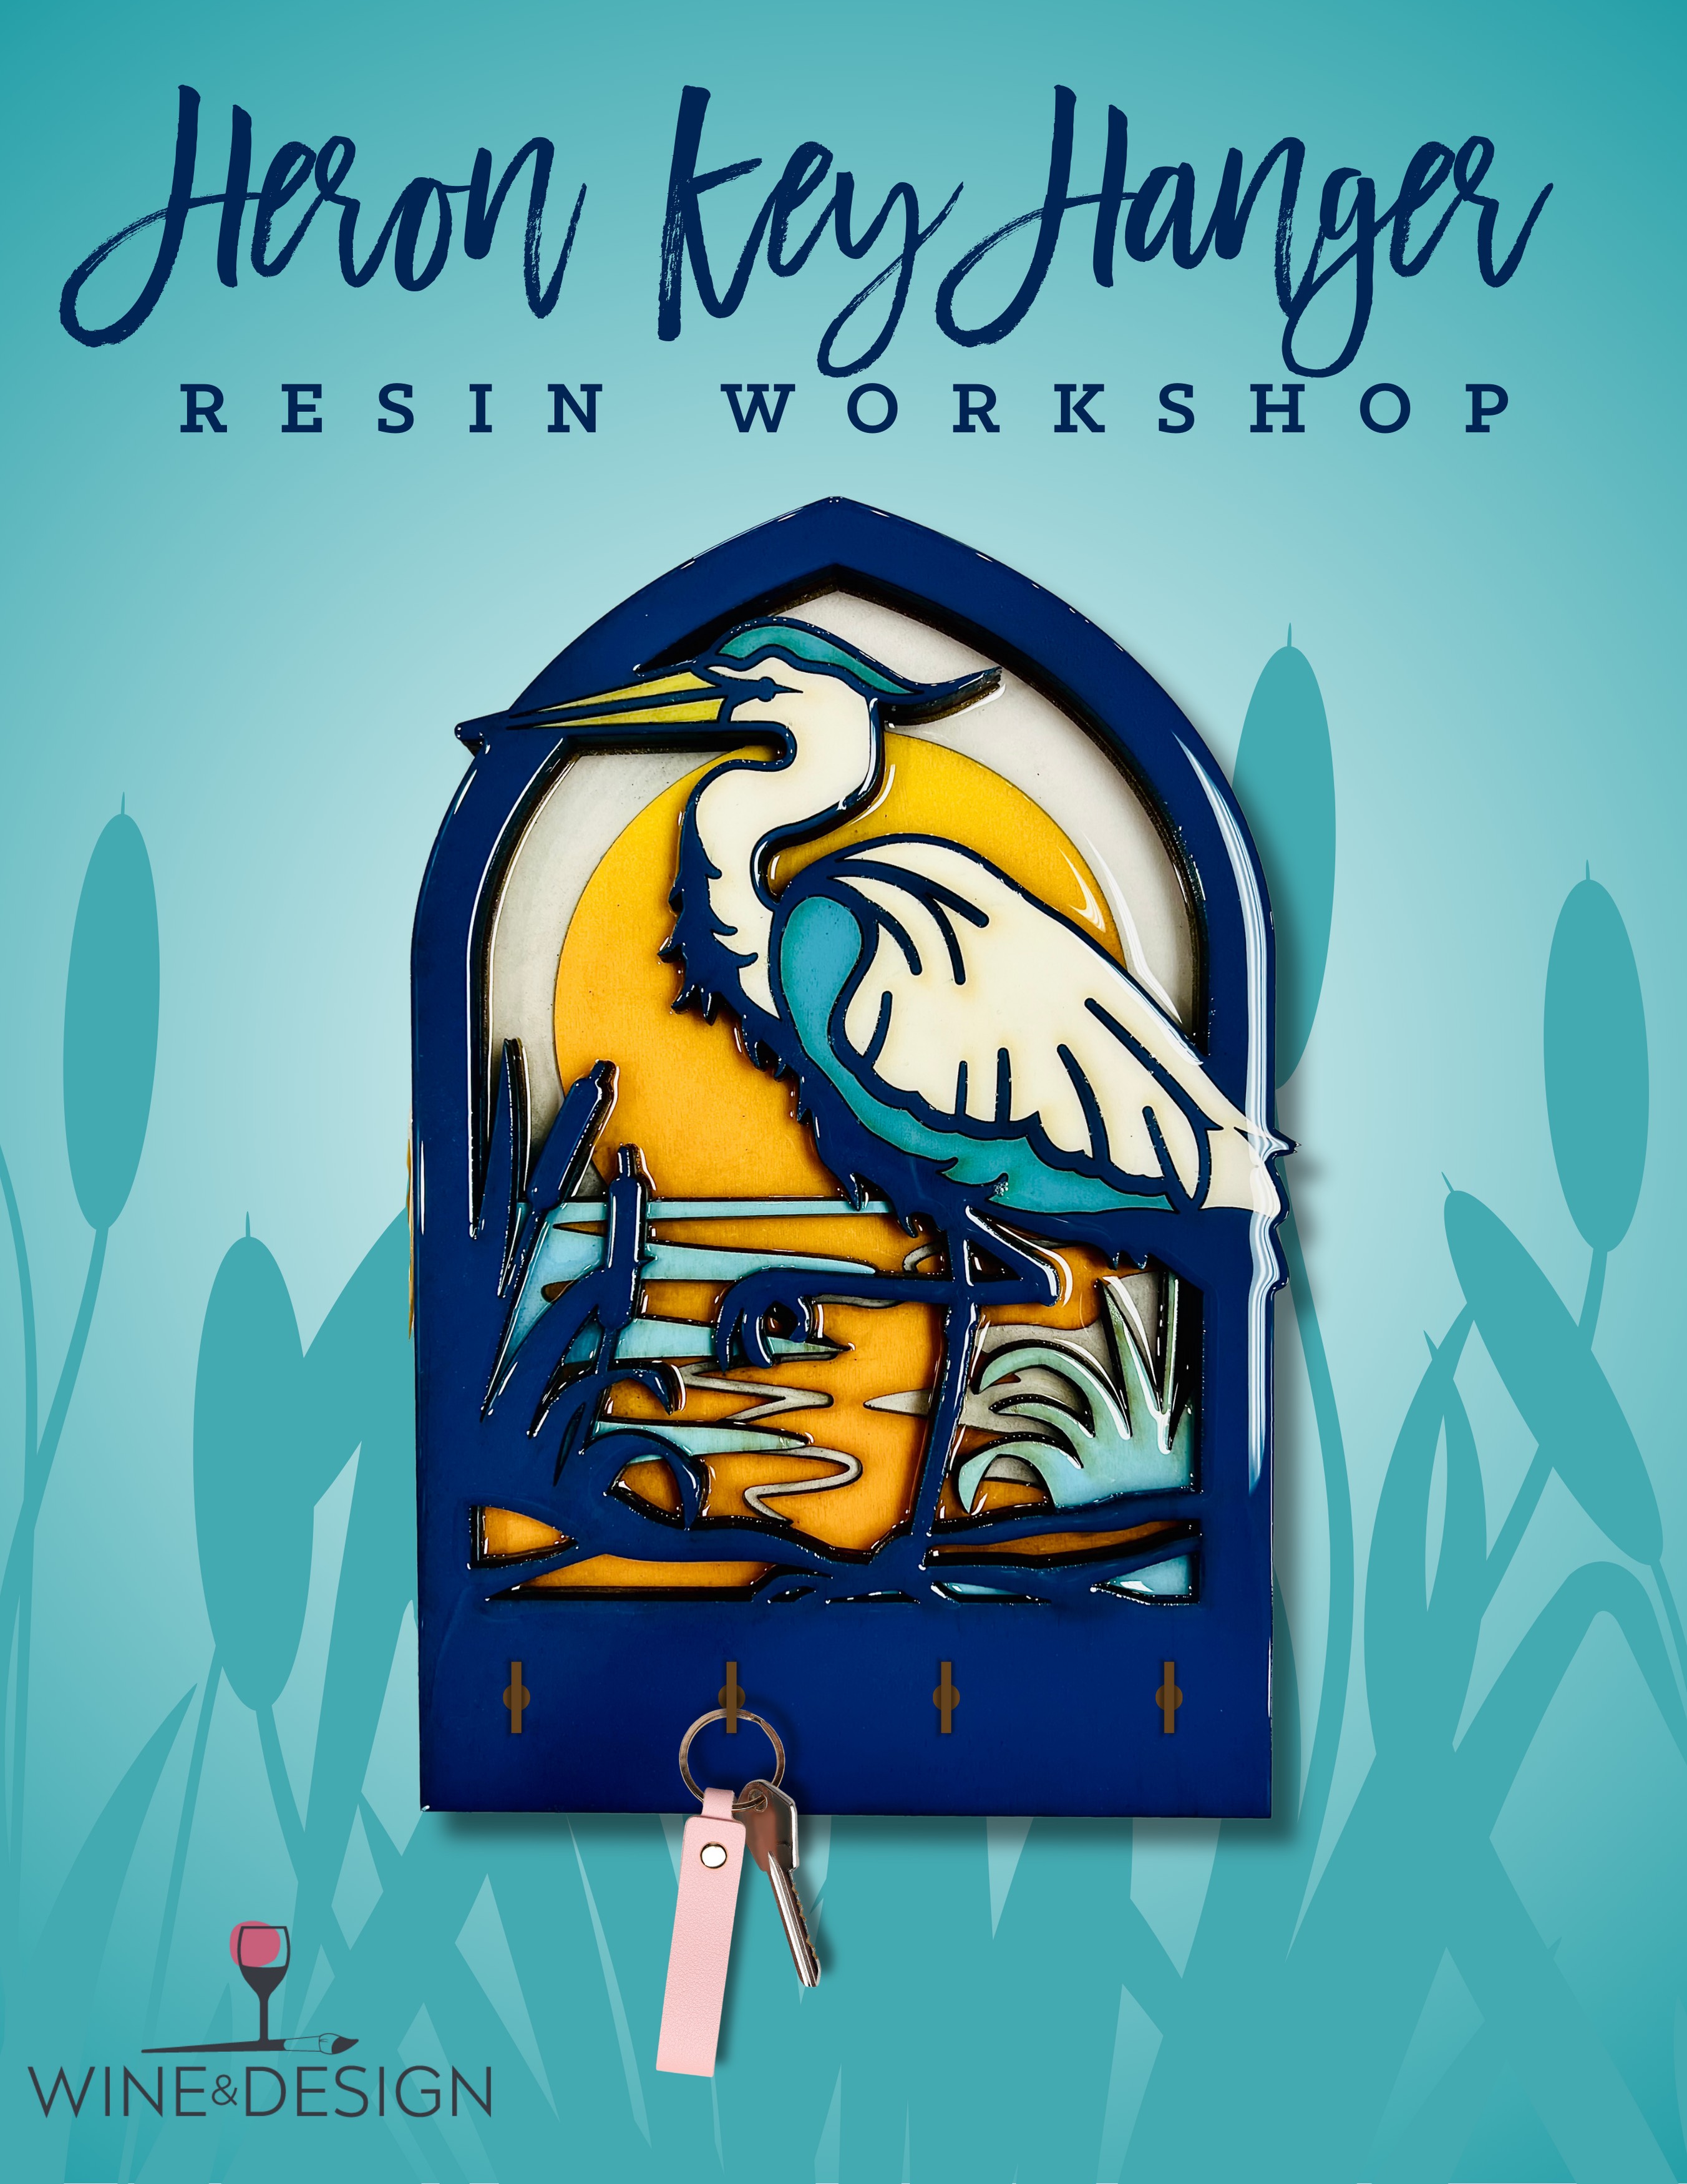 NEW RESIN WORKSHOP: Heron Key Hanger! 